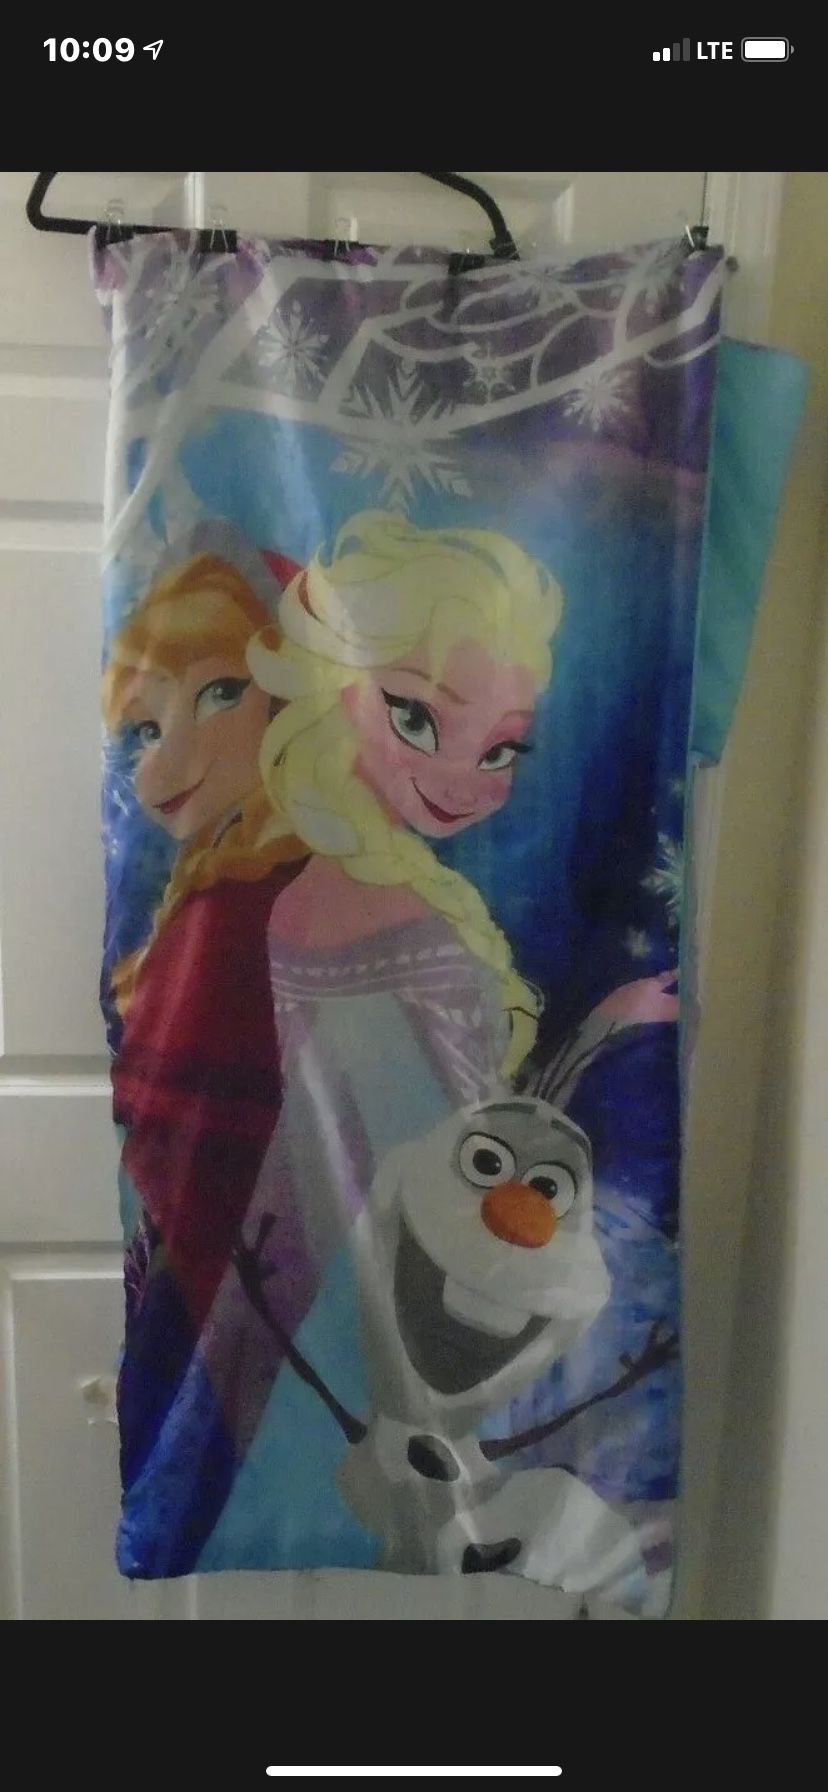 Disney Frozen Elsa Anna Olaf Sleeping Bag Slumber Party 